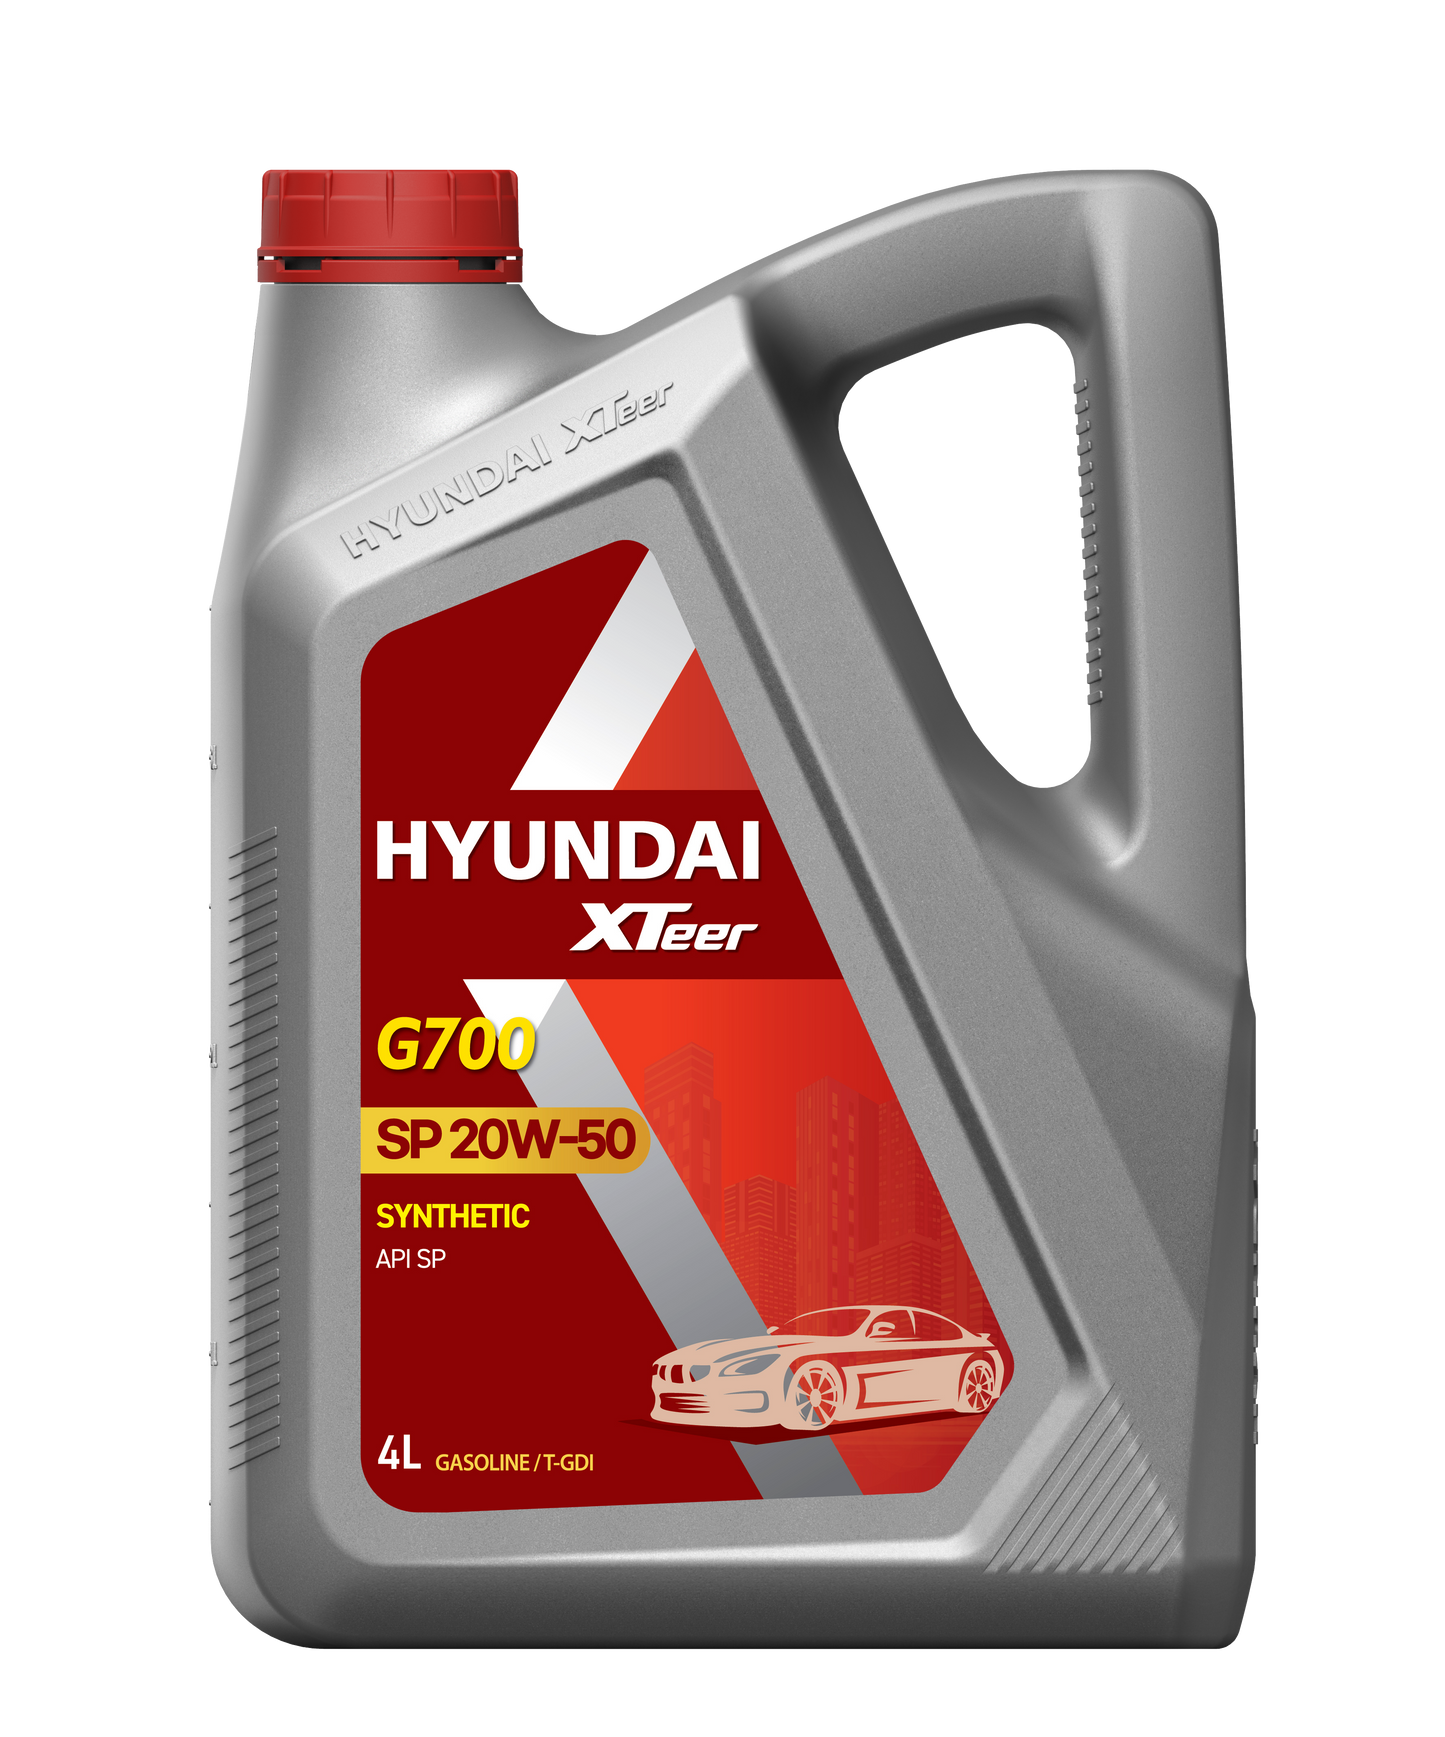 HYUNDAI XTeer GASOLINE ENGINE OIL G700 5W30 1L / 5L-Synthetic Oil